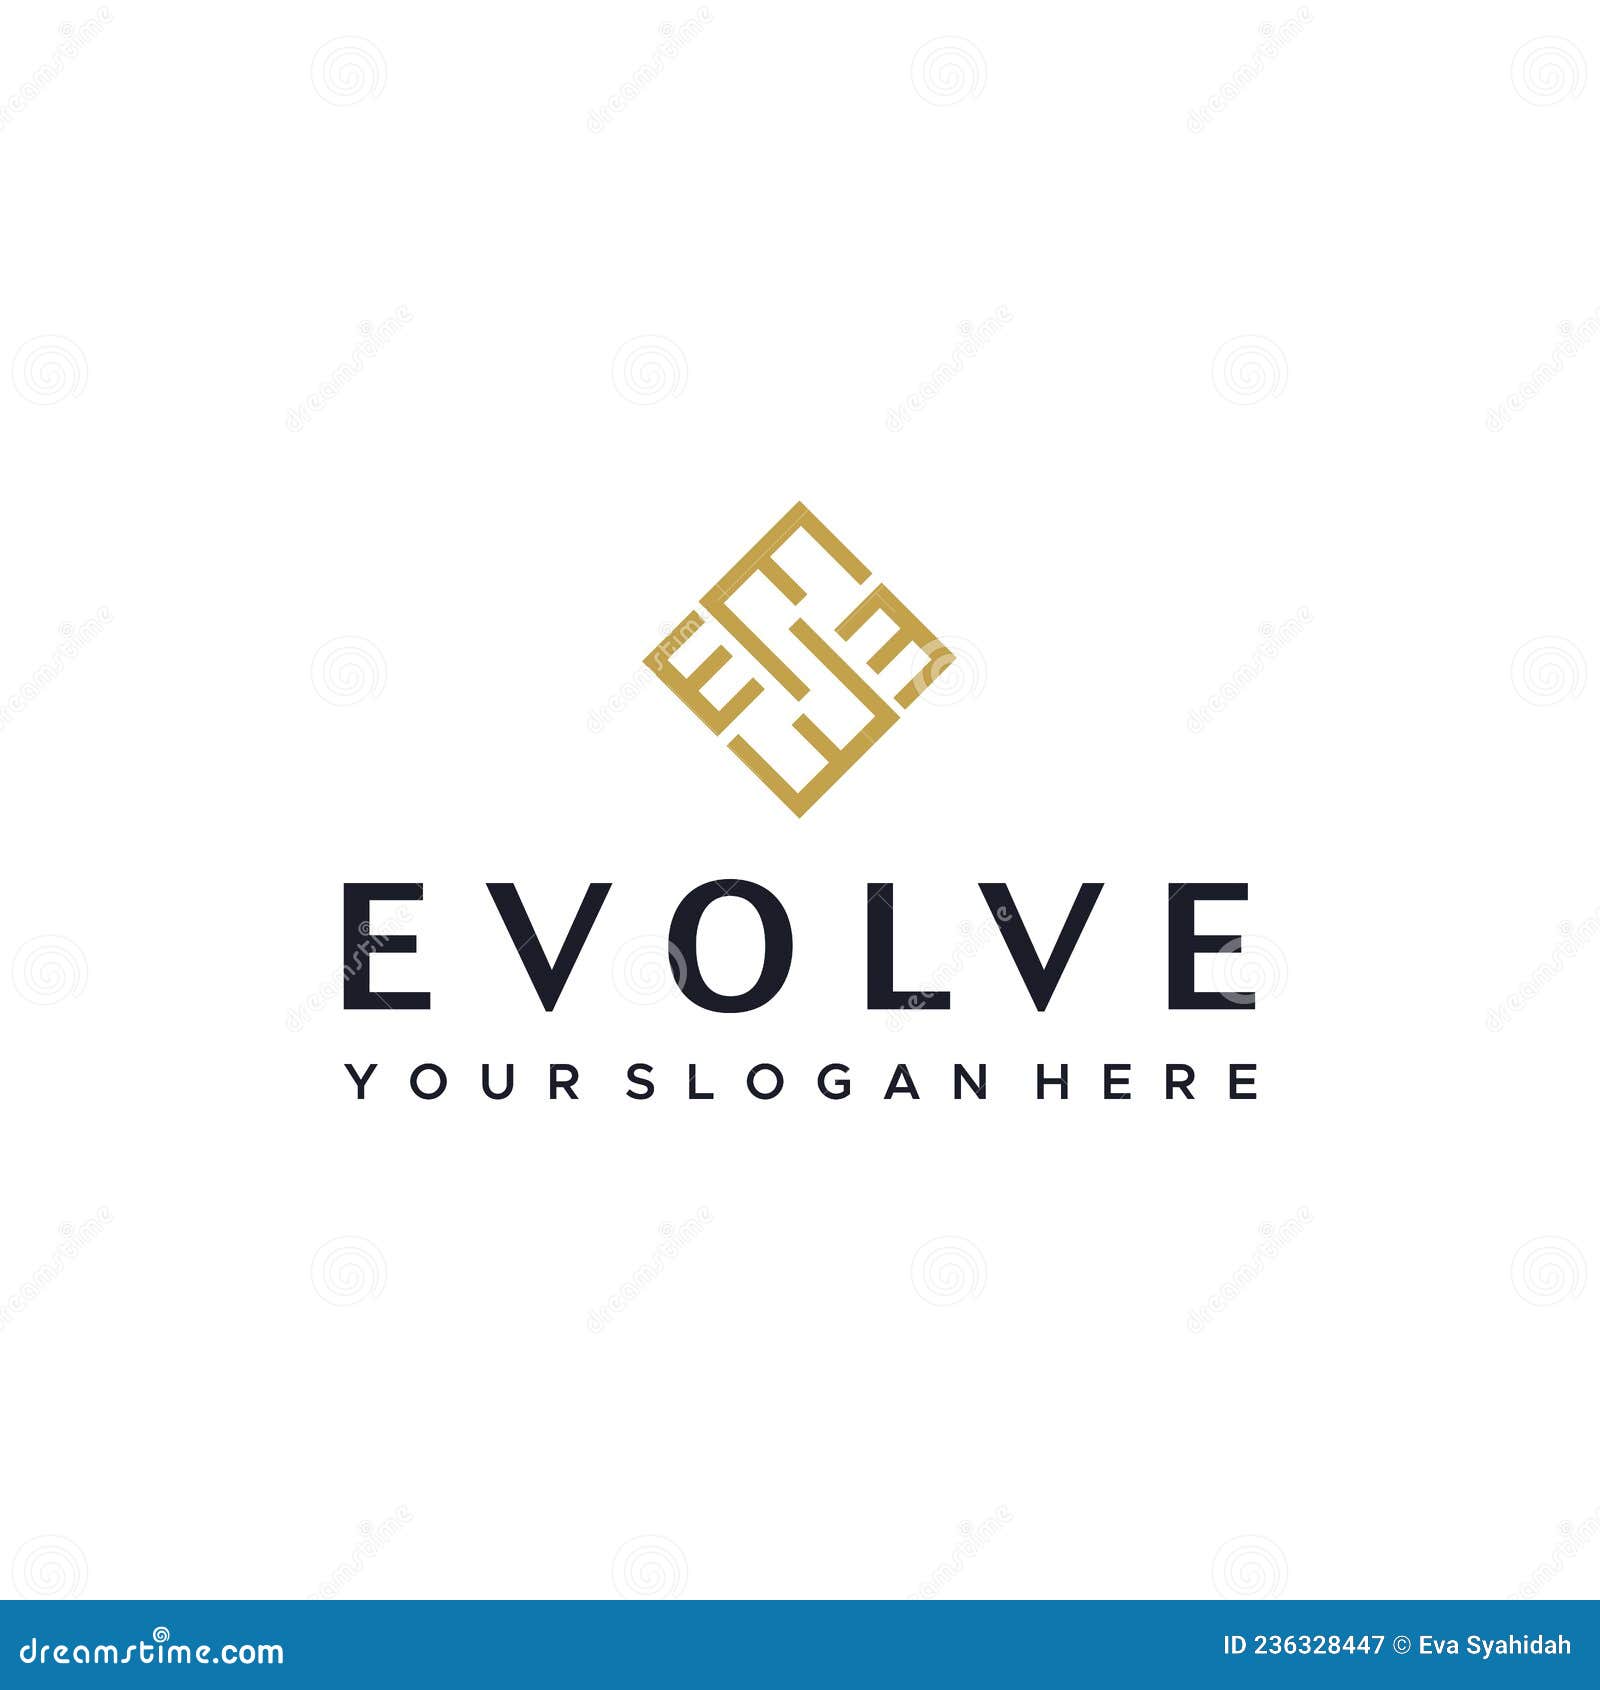 Branding - Evolve Marketing B2B digital agency, Milton Keynes, Northampton